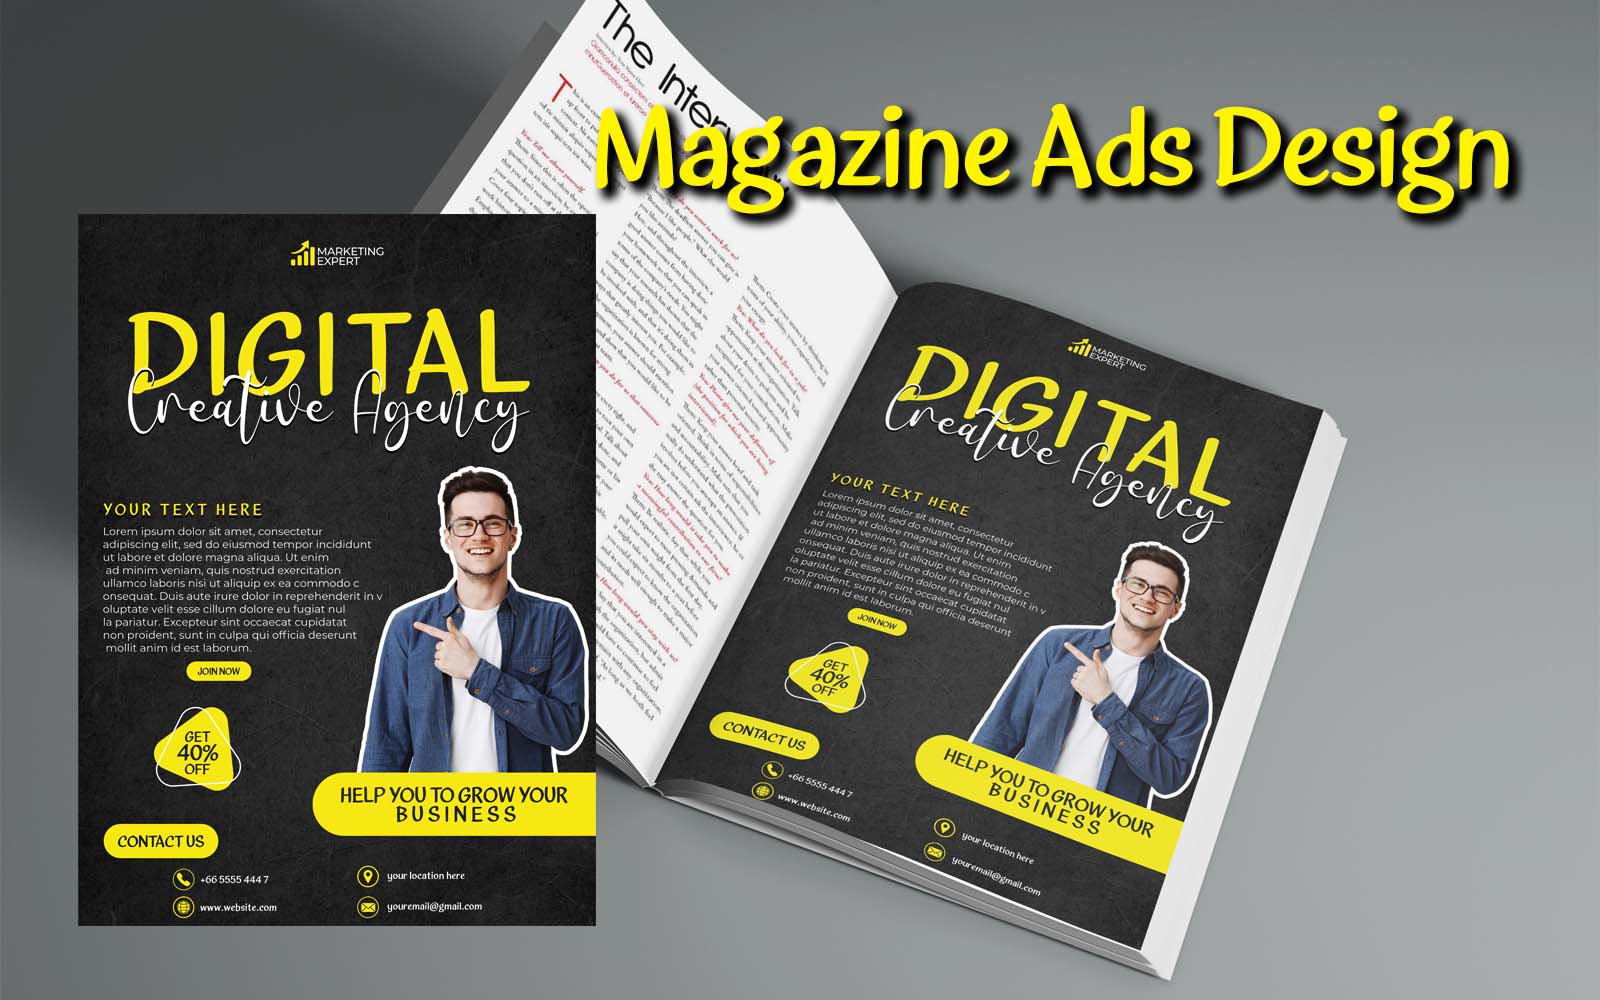 Magazine Ad Design for Digital Creative Agency